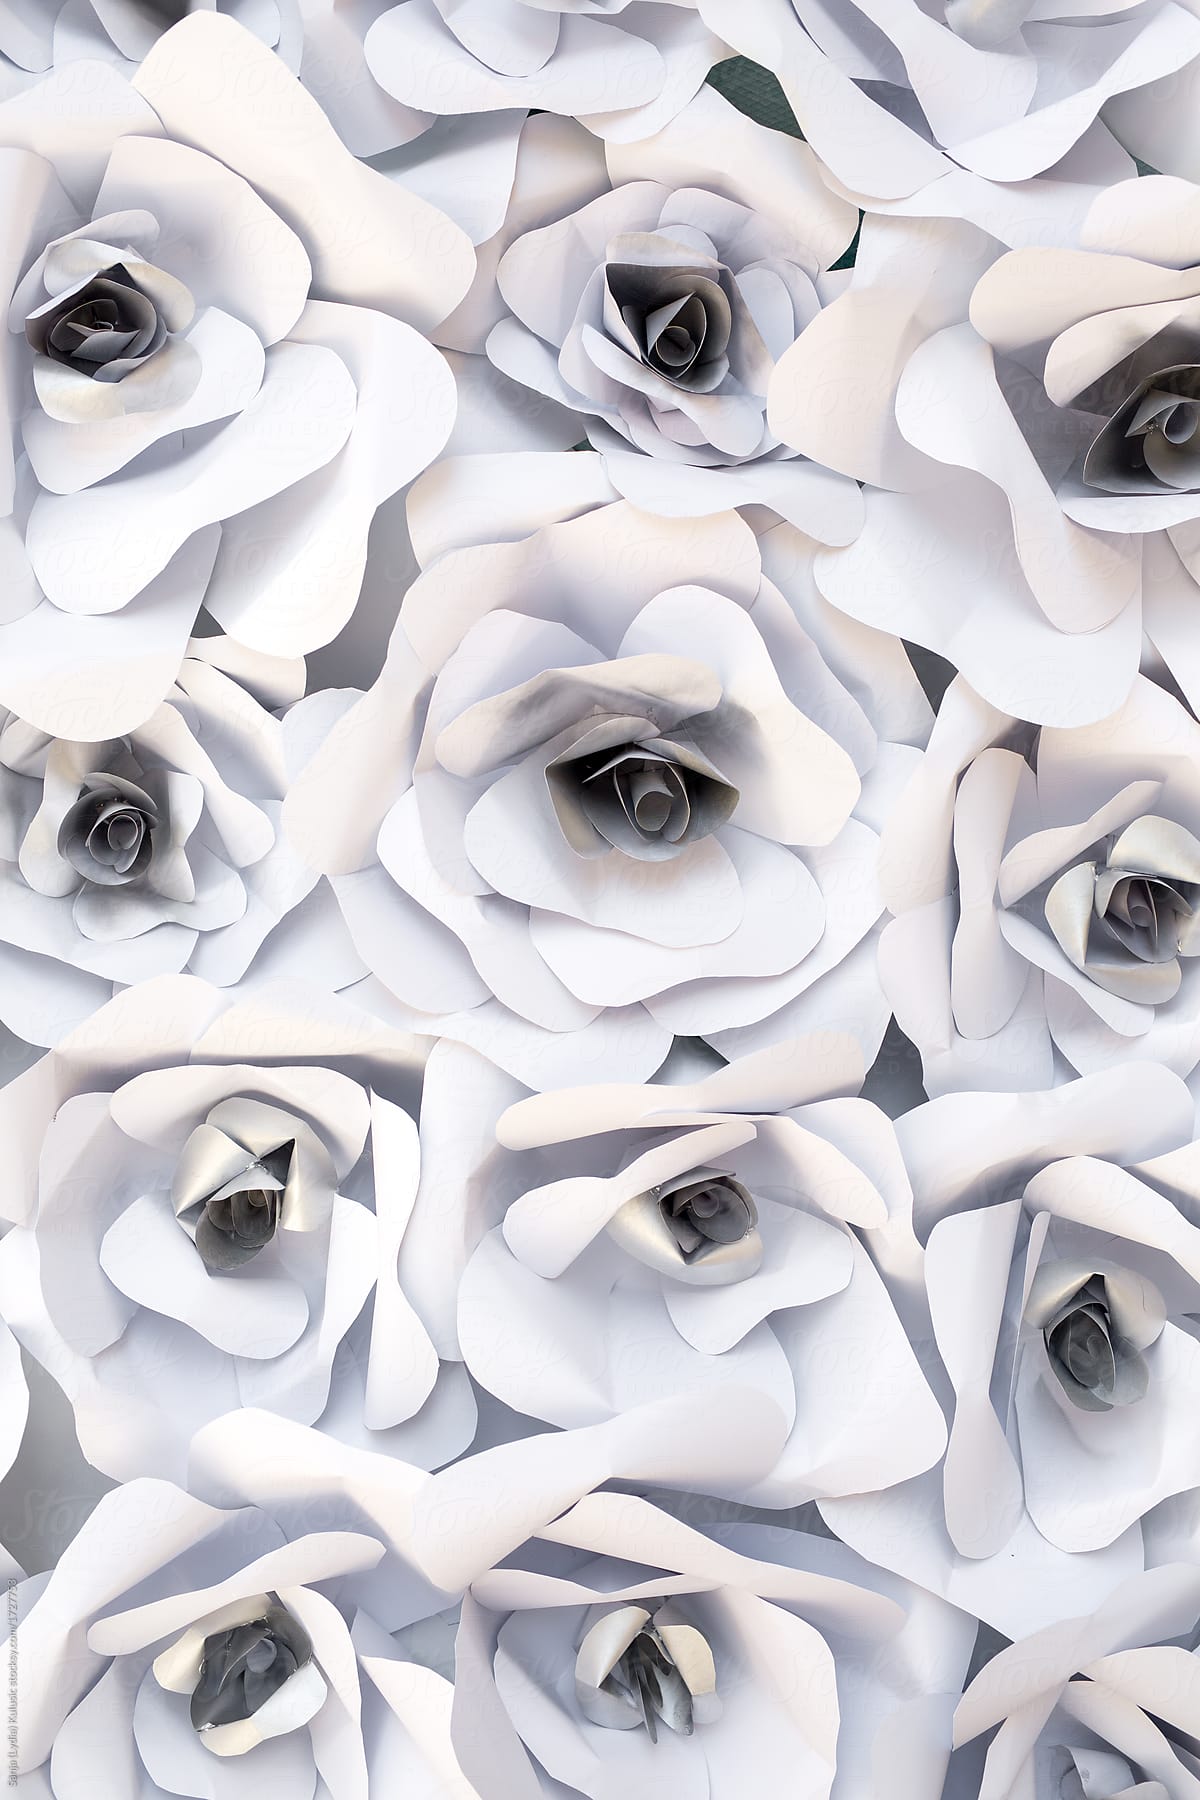 Big White Floral Paper Art Wall By Sanja Lydia Kulusic